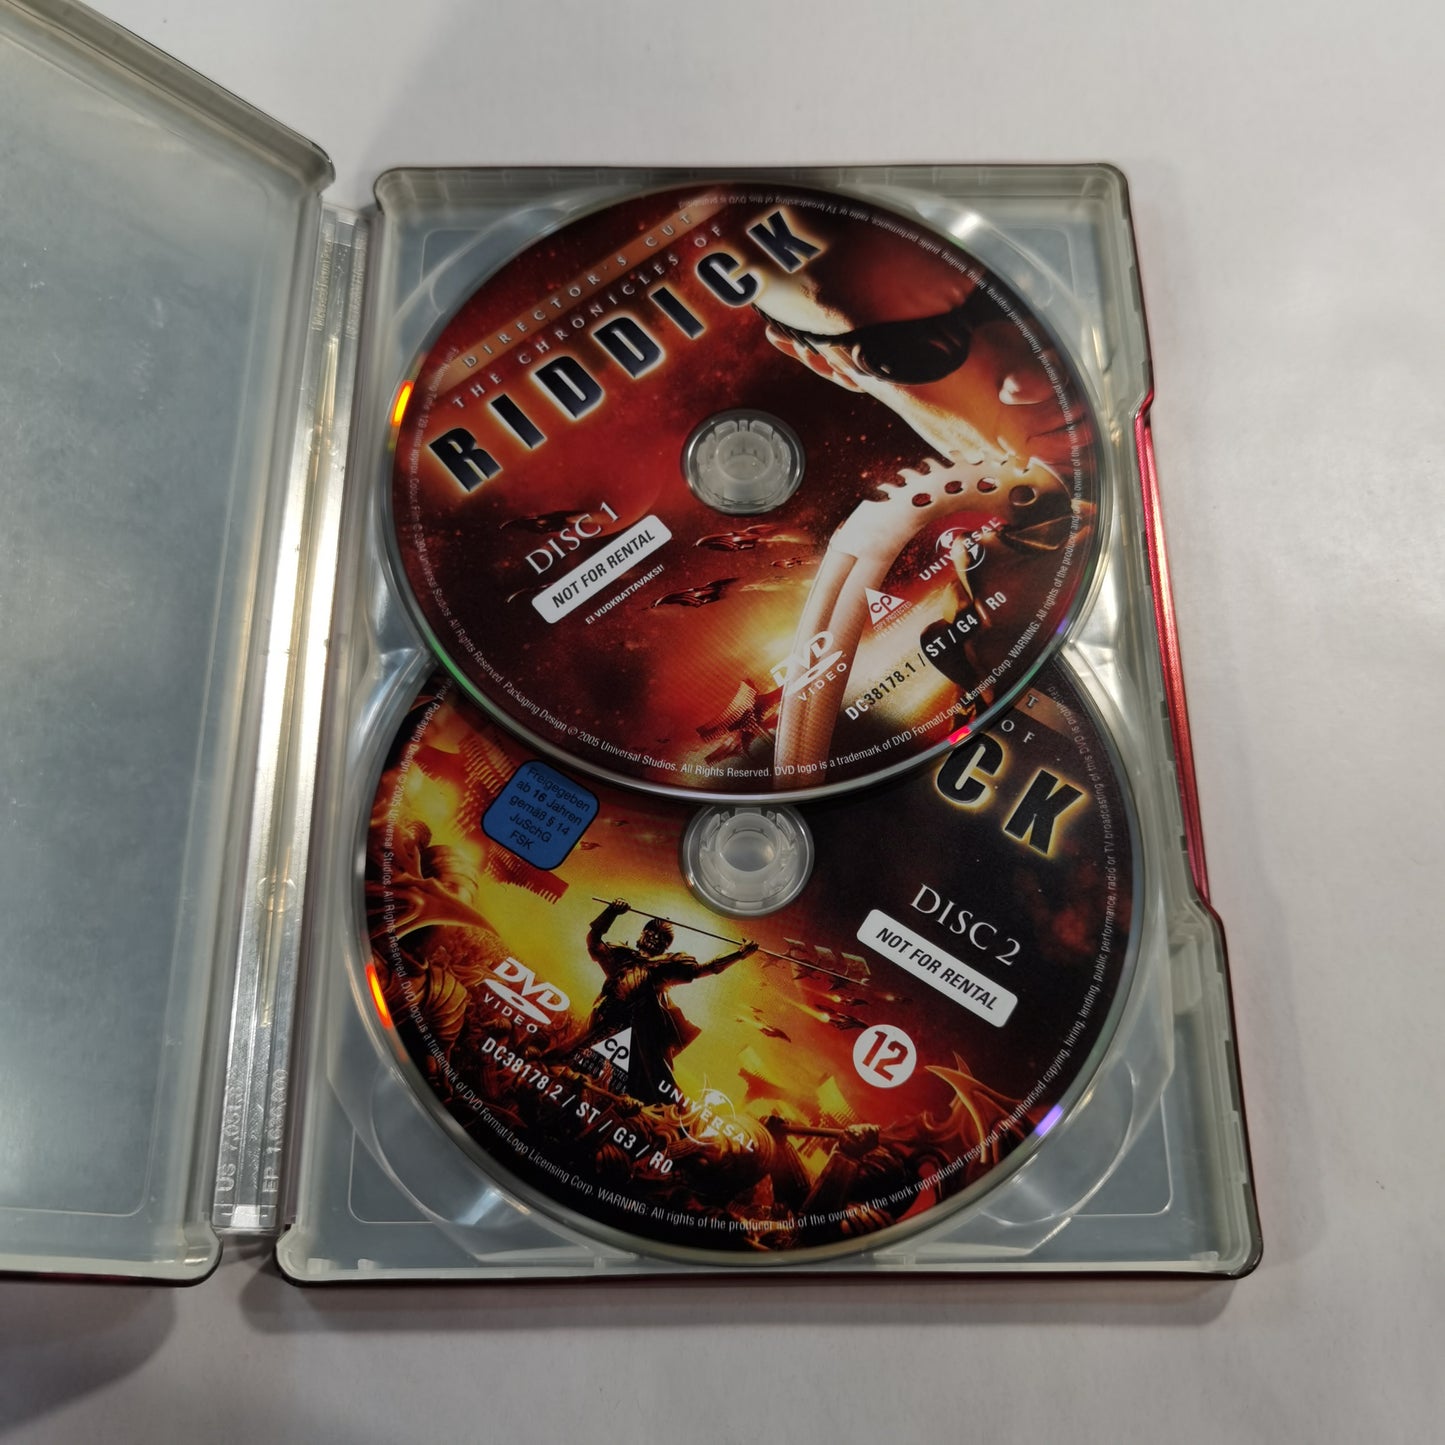 The Chronicles of Riddick (2004) - DVD SE NO DK FI 2008 Steelbook